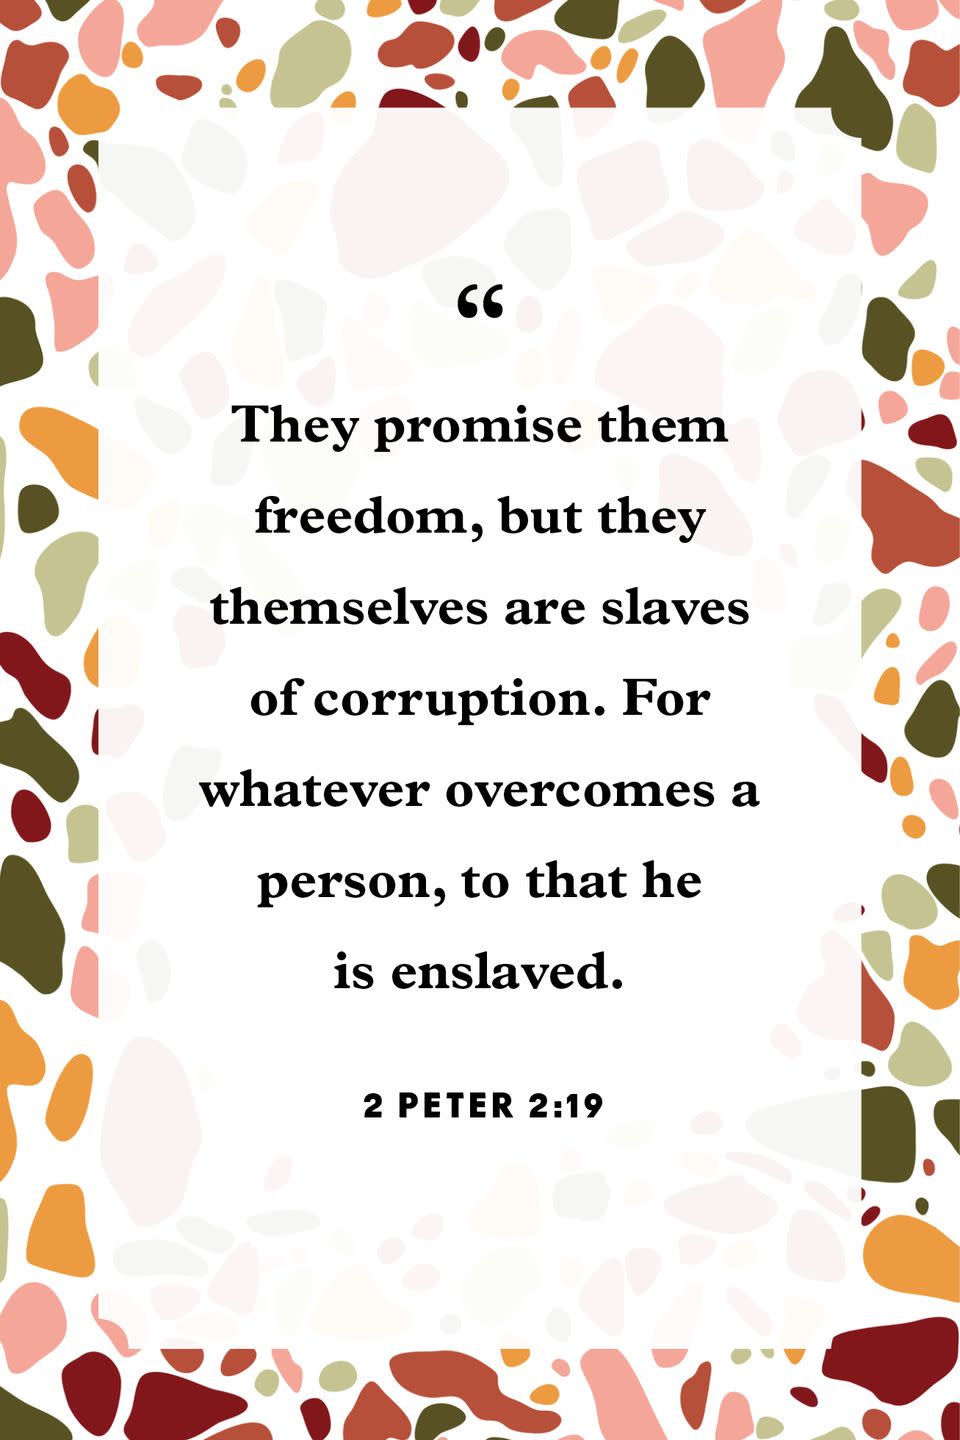 20) 2 Peter 2:19